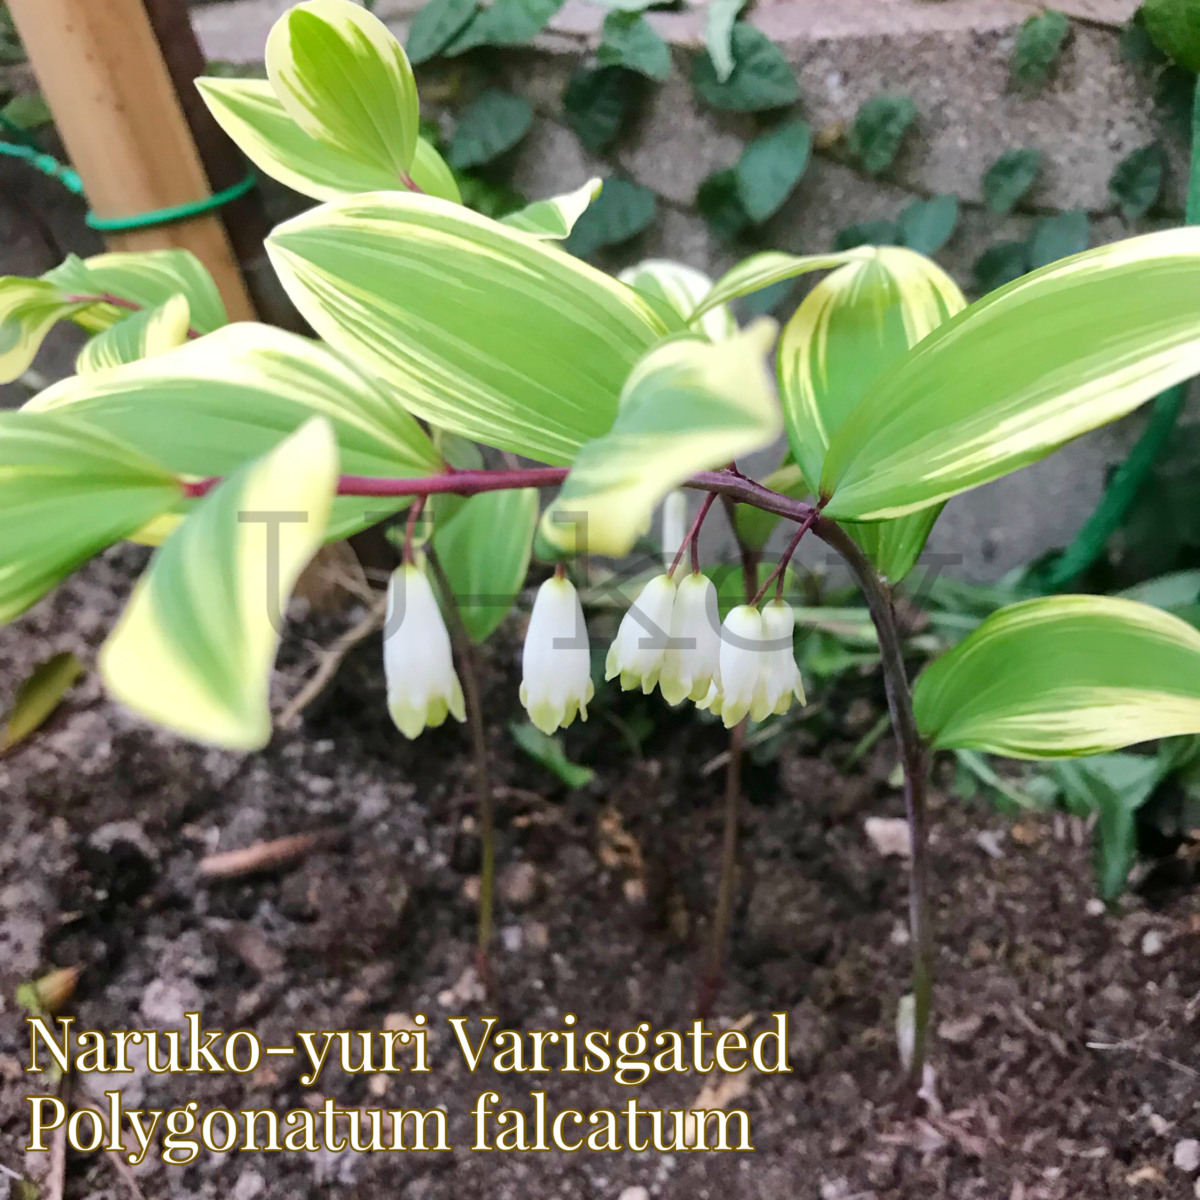 Naruko-Yuri variegata,Polygonatum kiotense